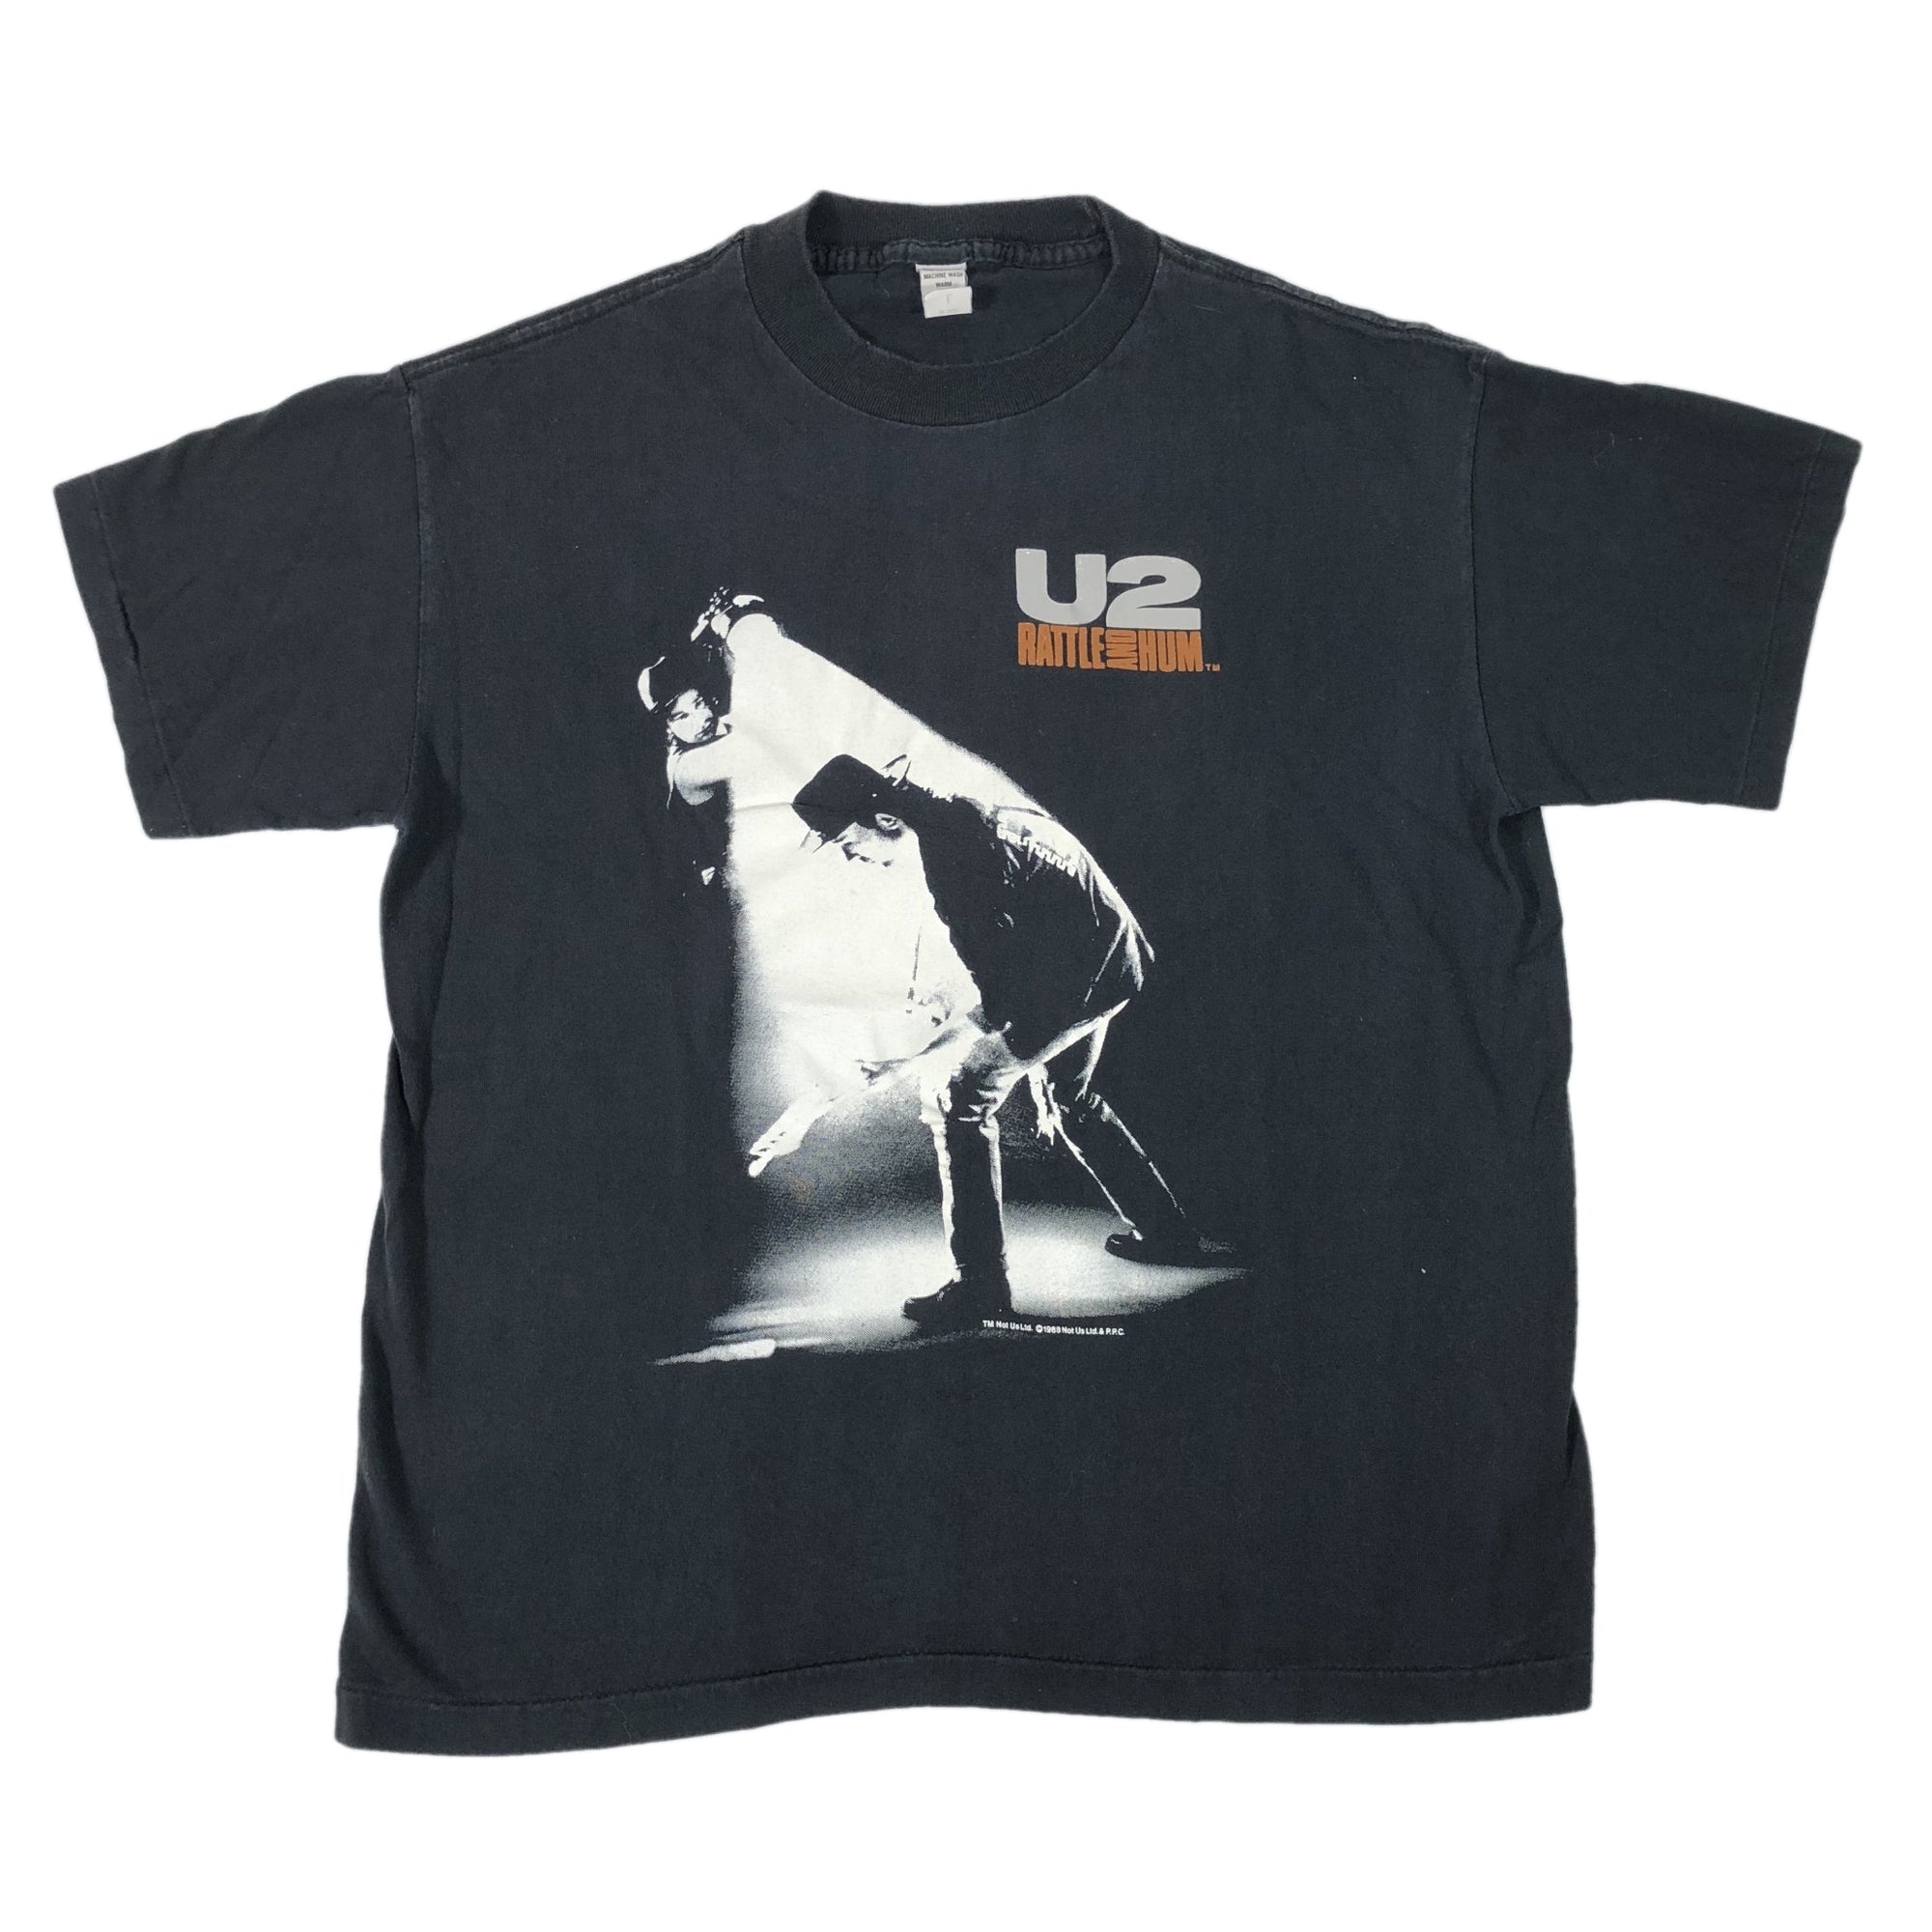 Vintage U2 "Rattle and Hum" T-Shirt - jointcustodydc